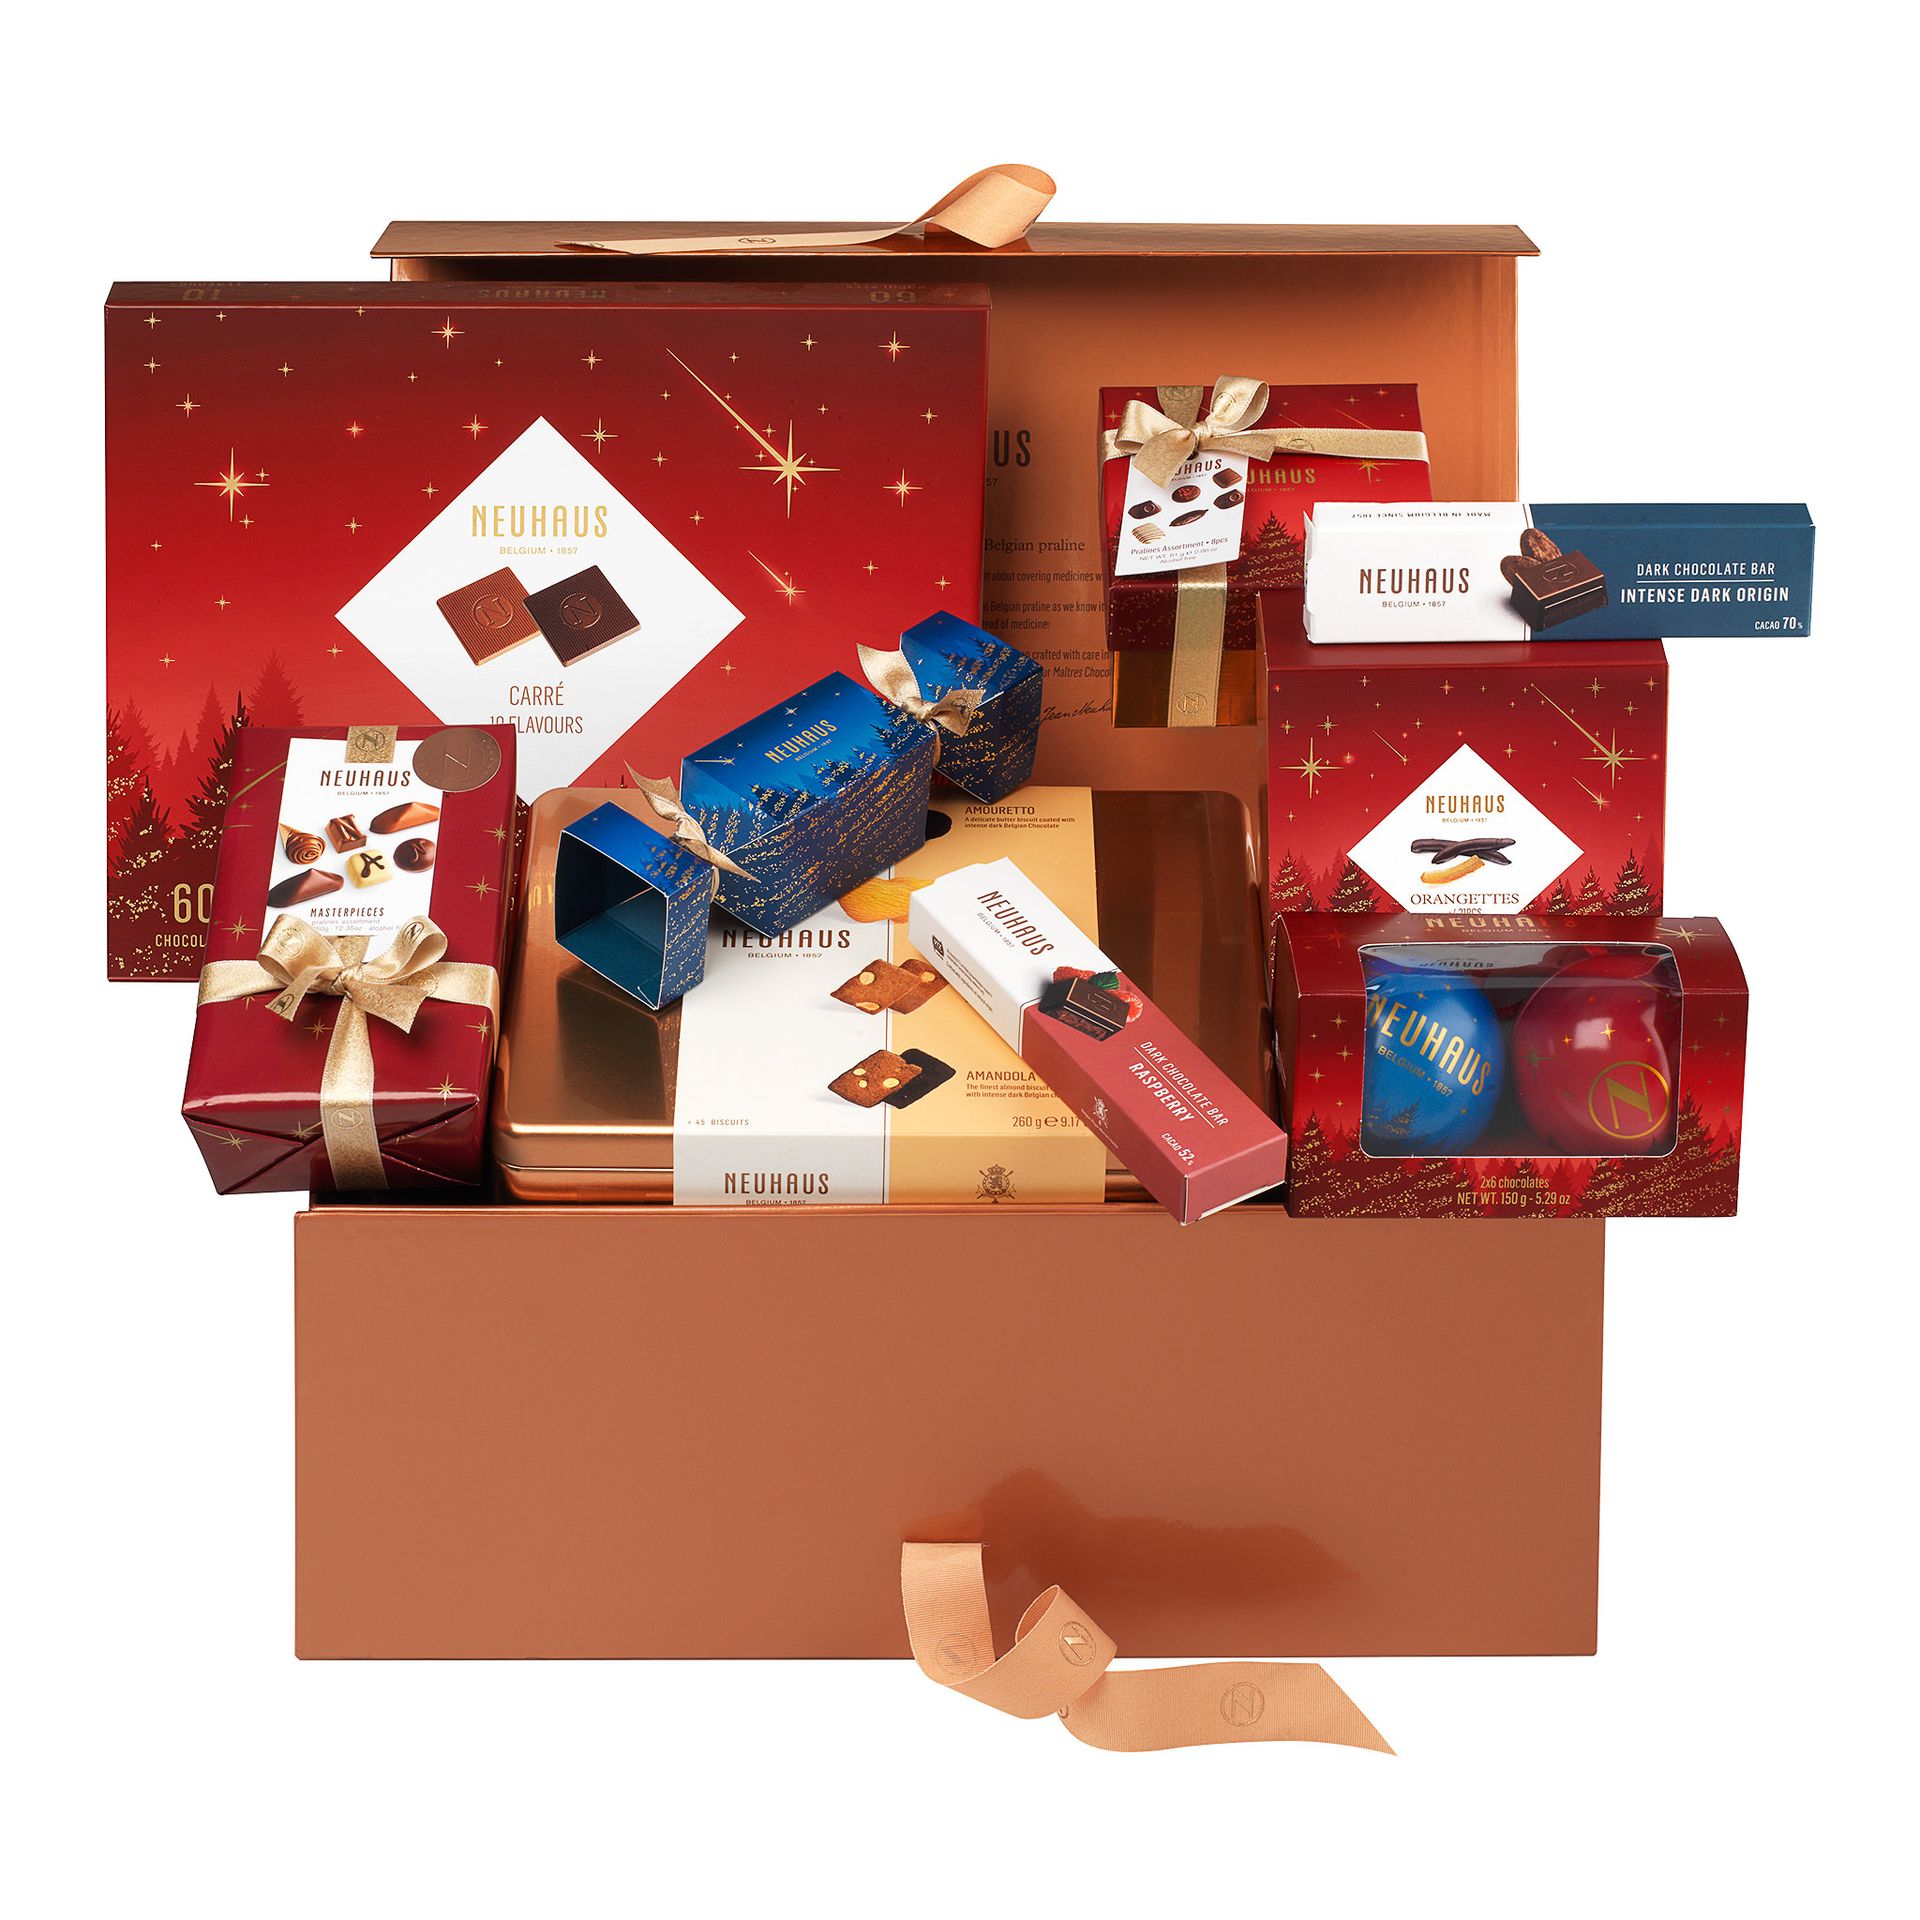 Neuhaus kerstmis hamper cadeau box